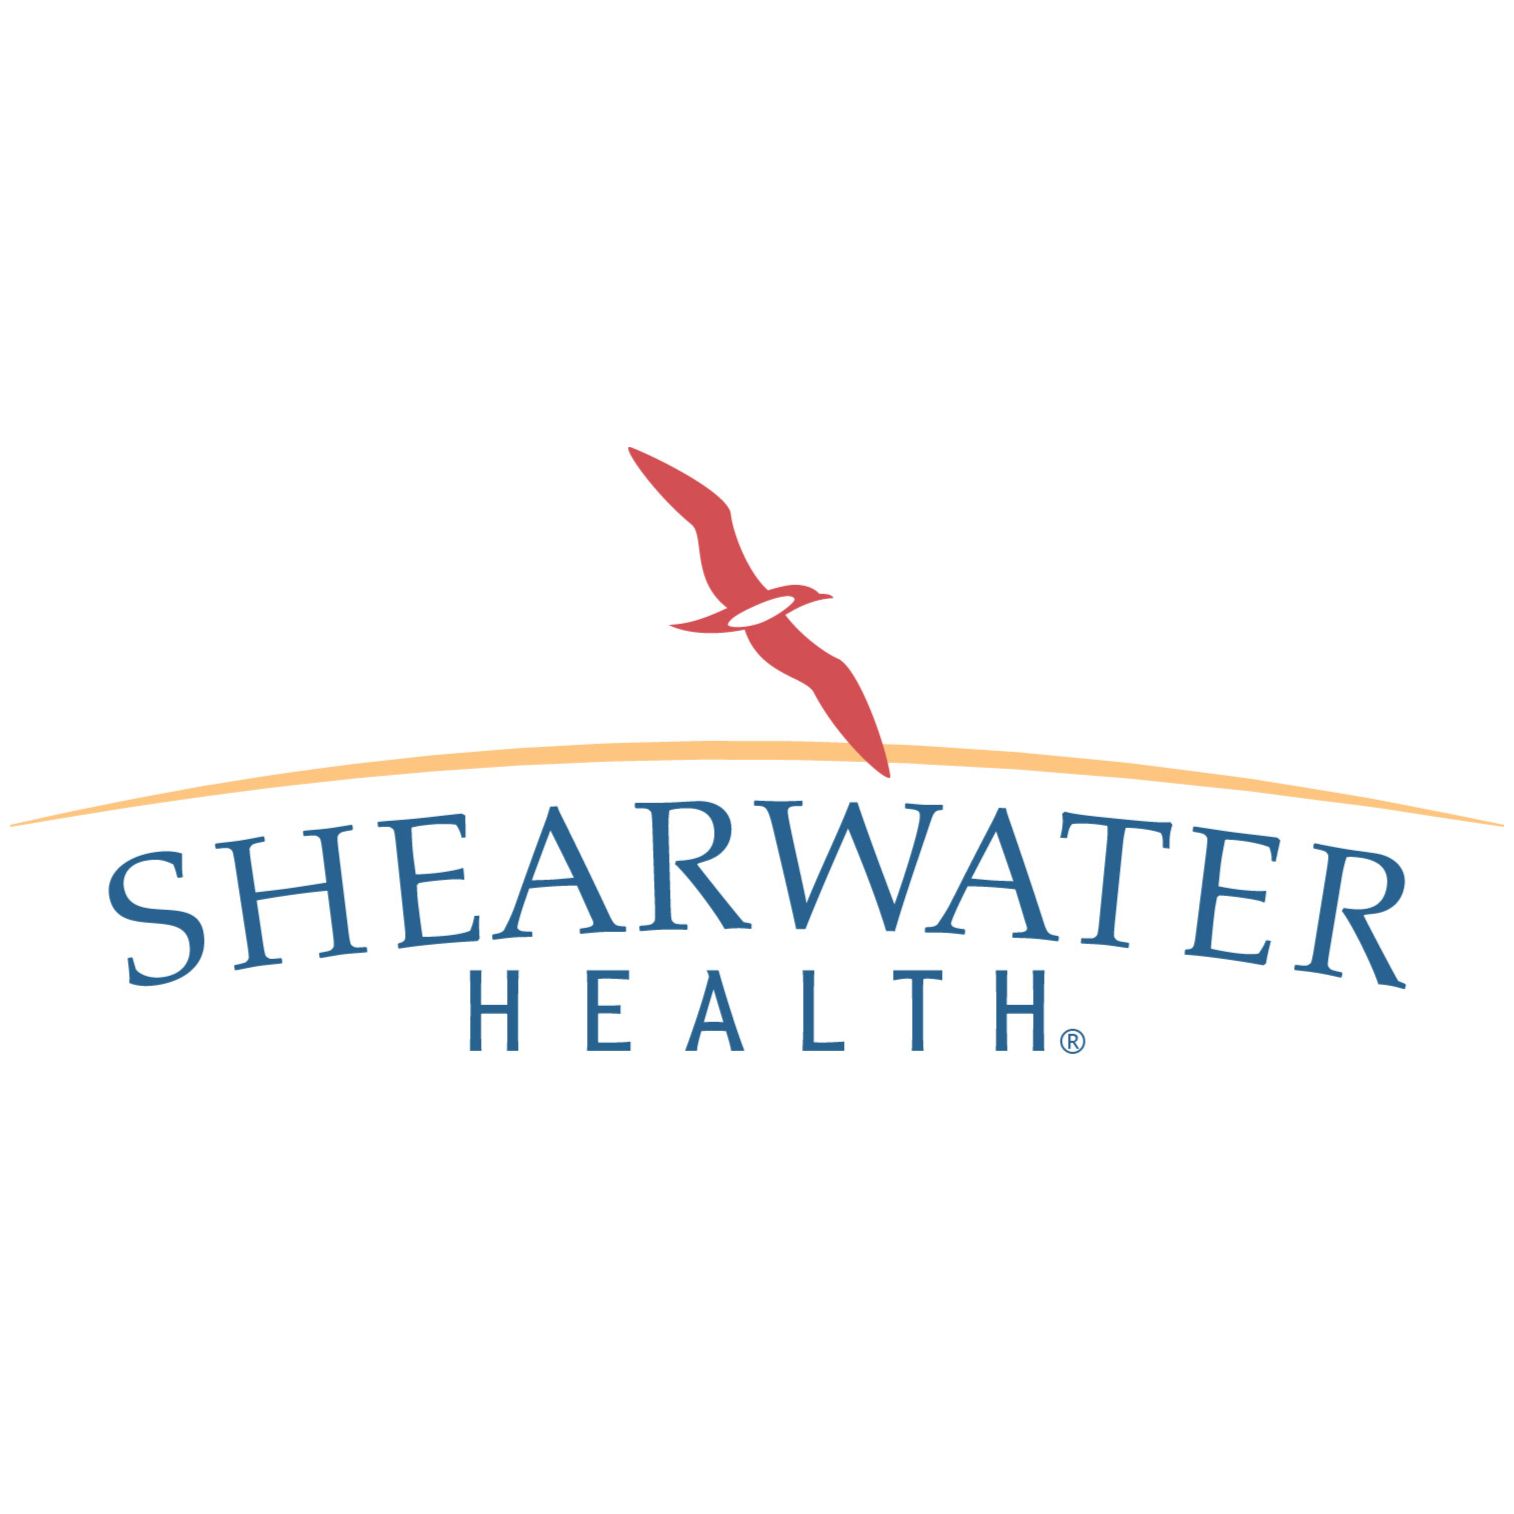 Shearwater Health logo